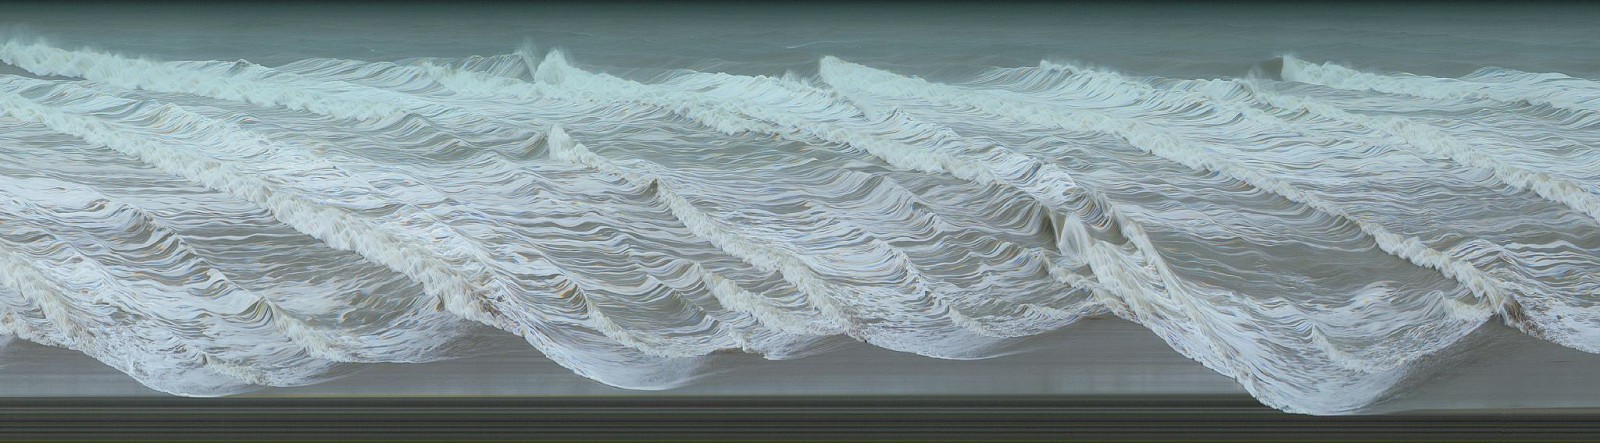 Jay Mark Johnson, STORM AT SEA #9C, 2010 Malibu - Ventura CA
archival pigment on paper, mounted on aluminum, 40 x 144 in. (101.6 x 365.8 cm)